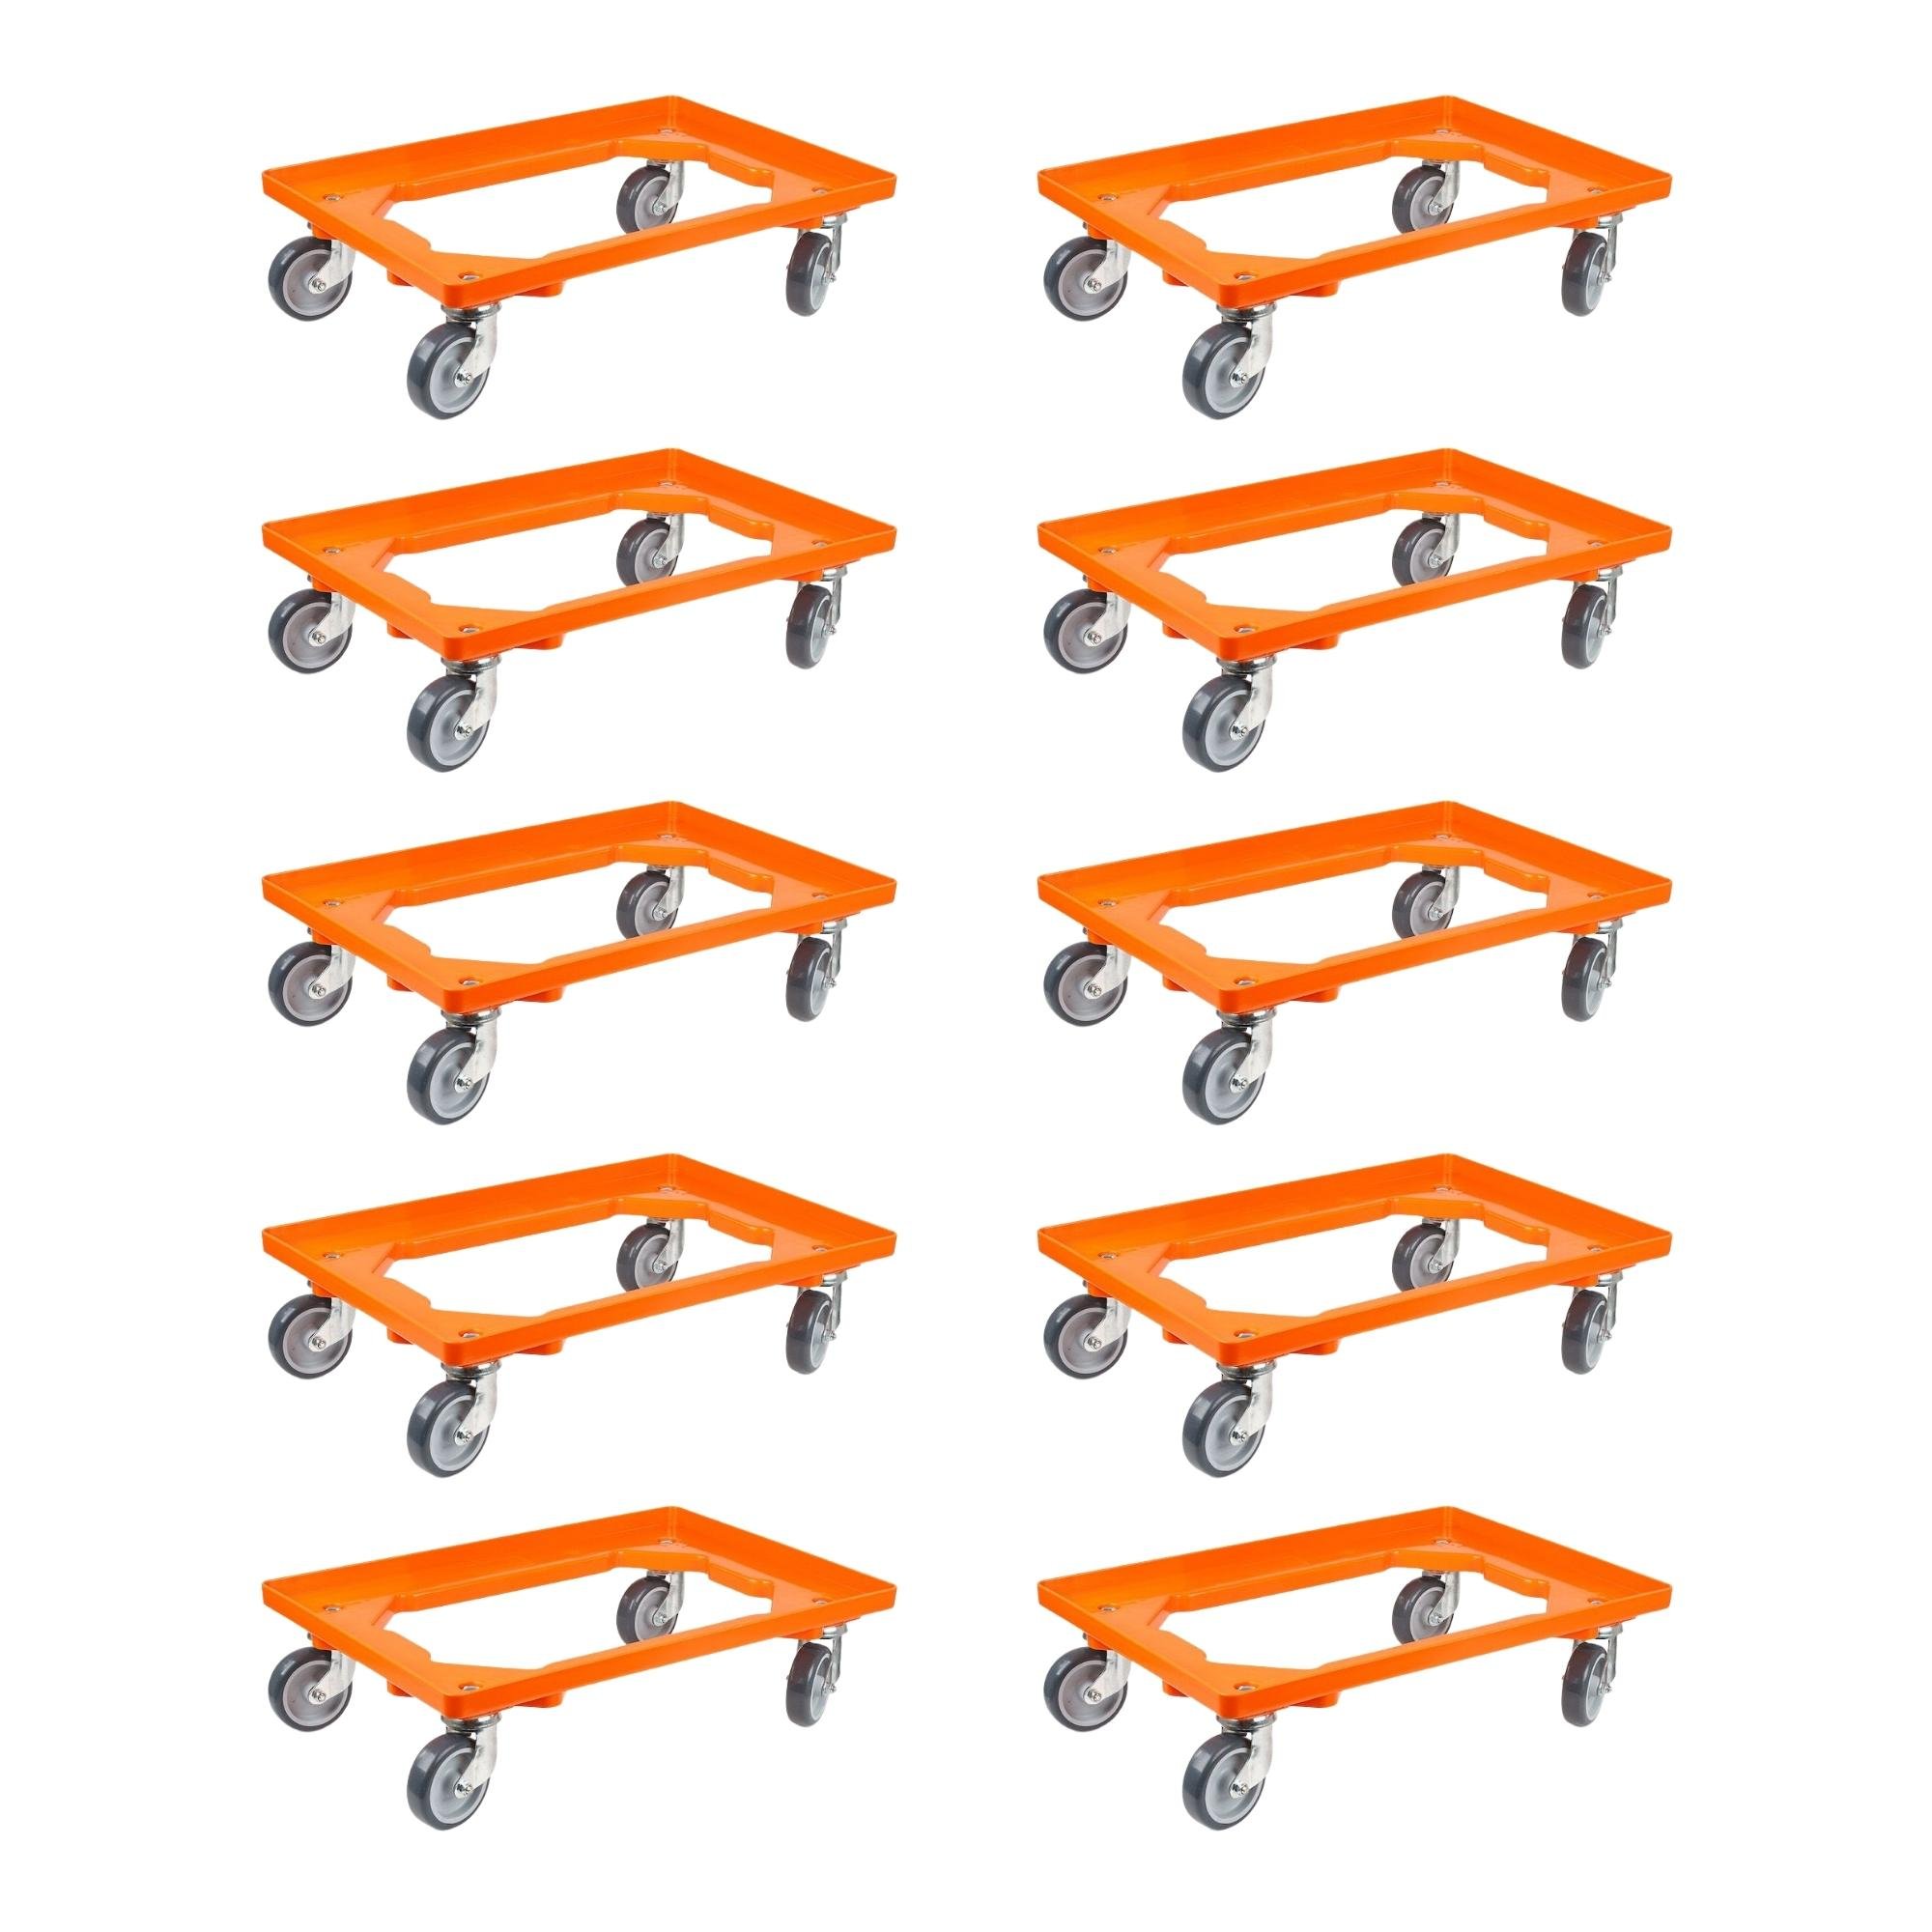 SparSet 10x Transportroller für Euroboxen 60x40cm mit Gummiräder orange | Offenes Deck | 2 Lenkrollen & 2 Bremsrollen | Traglast 300kg | Kistenroller Logistikroller Rollwagen Profi-Fahrgestell